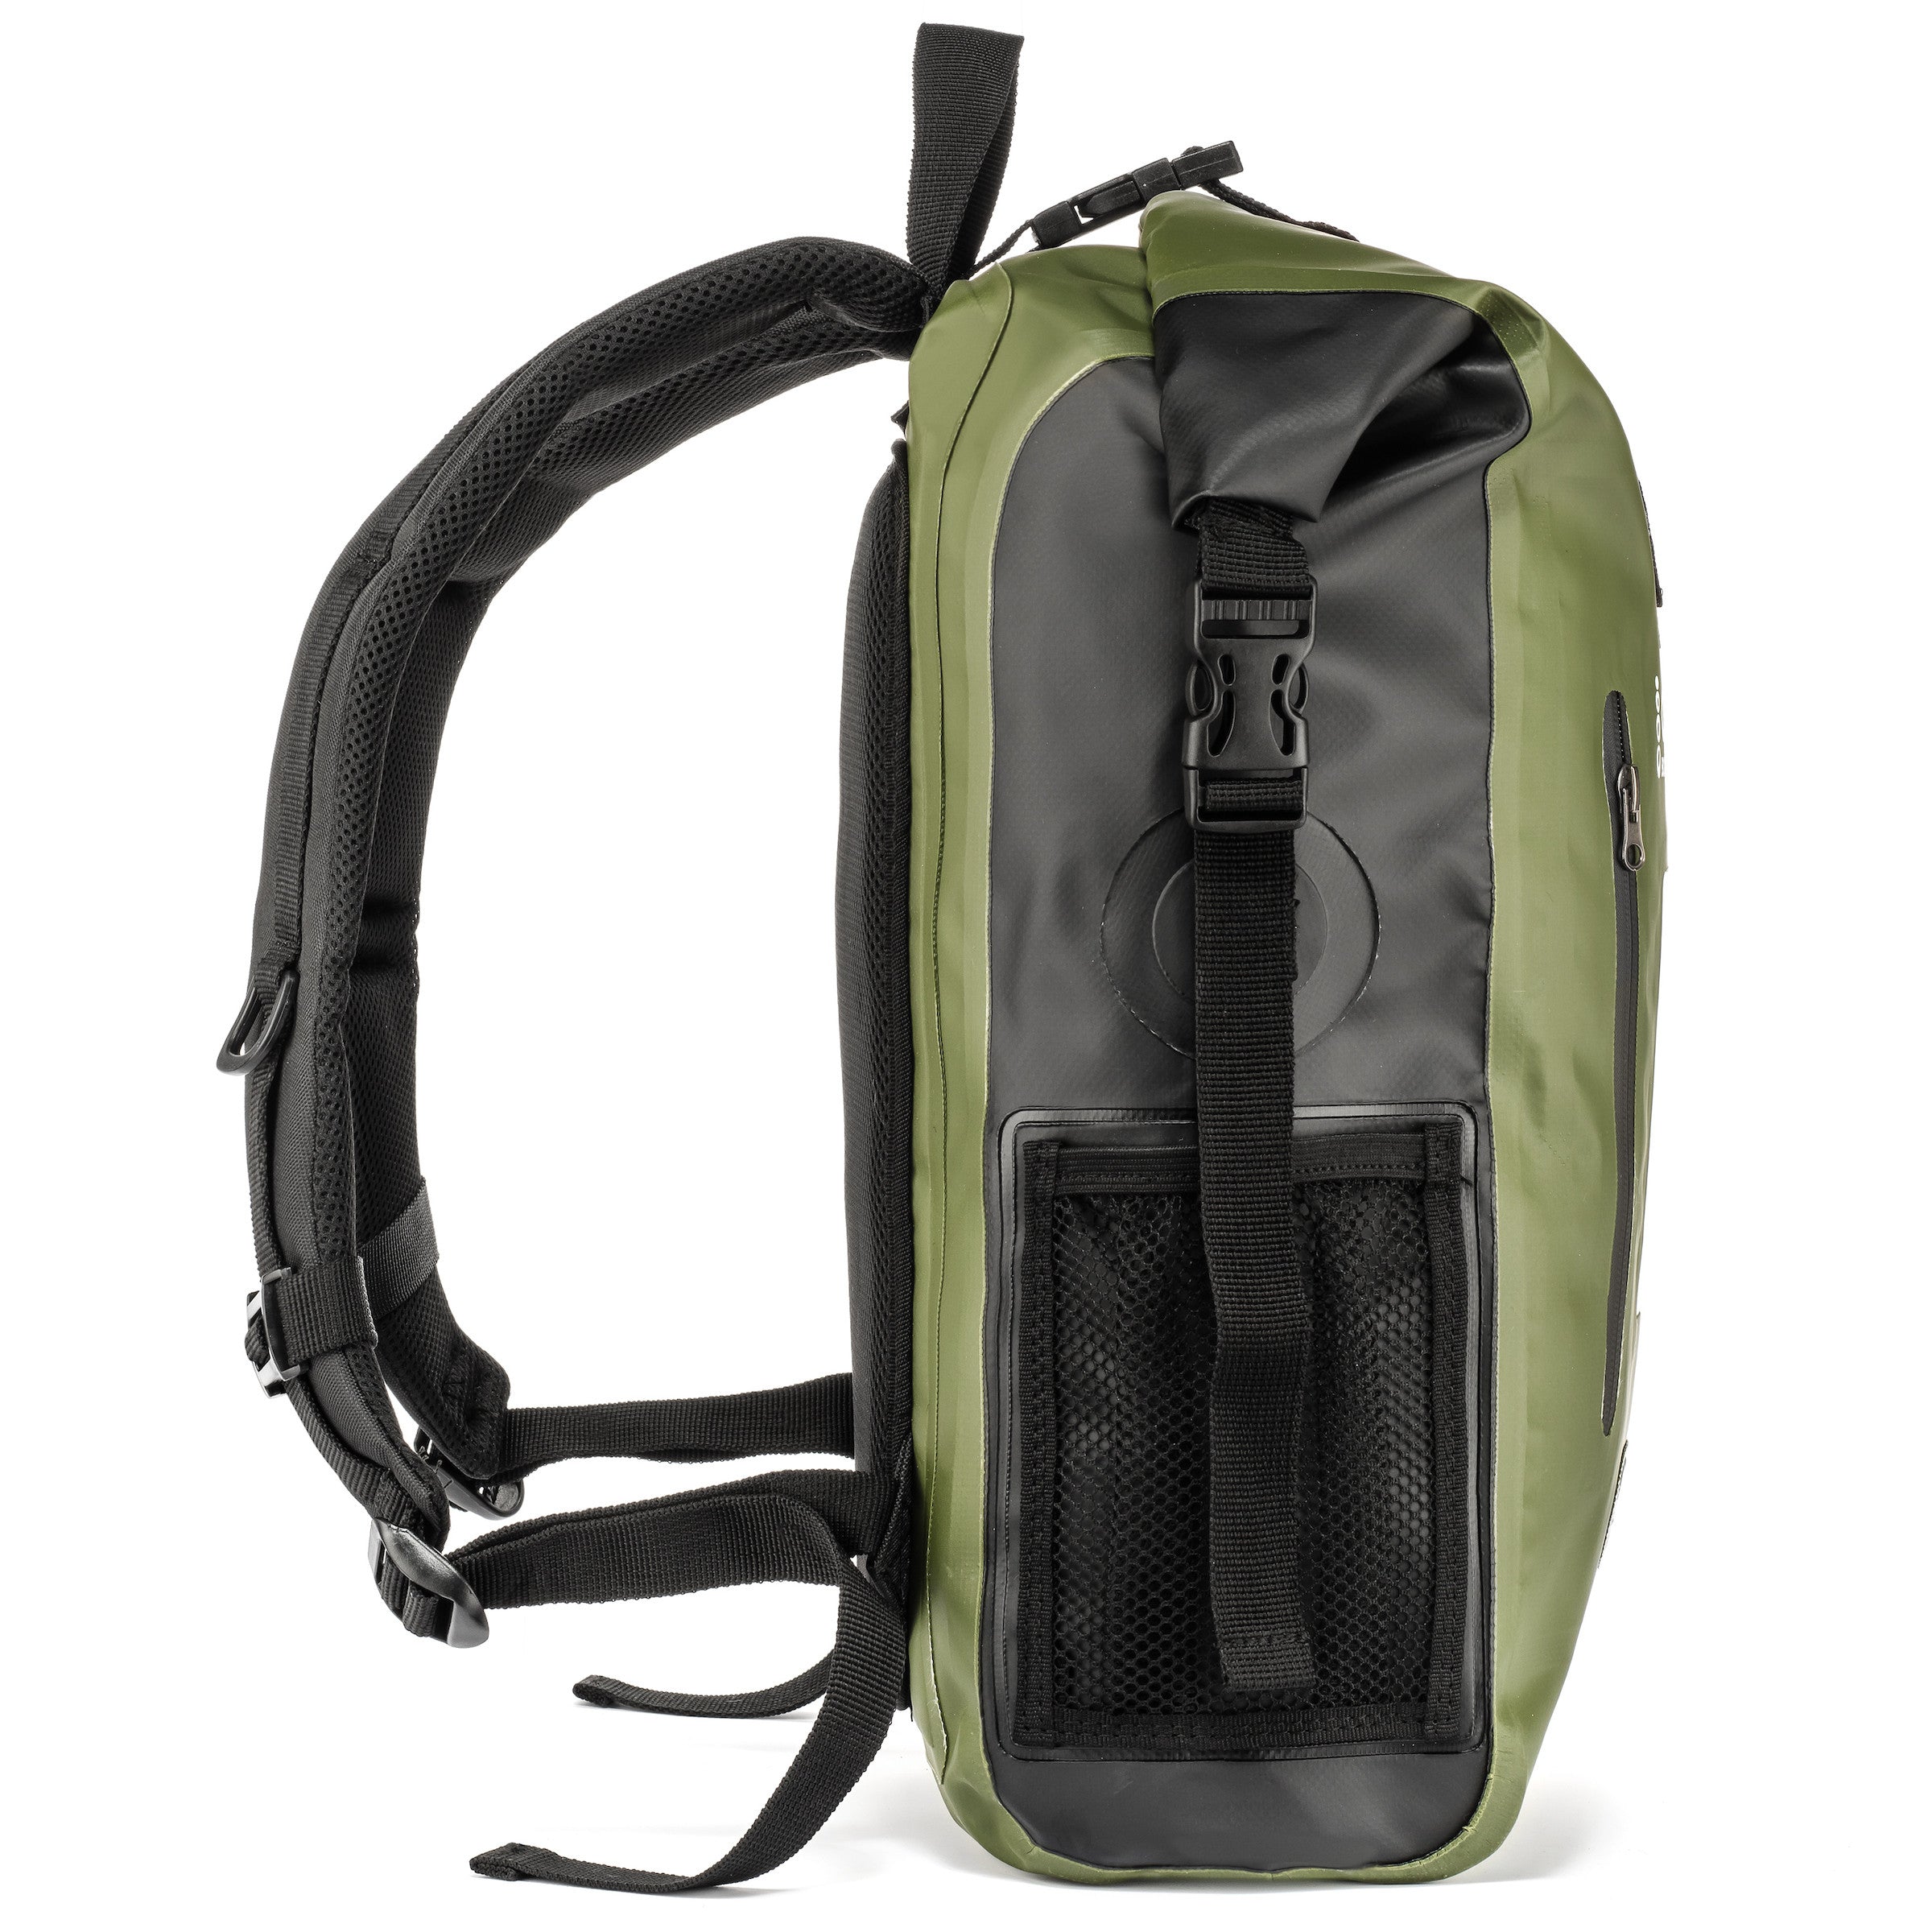 Dry Bag 3-Pack - 3L, 5L & 10L – COR Surf